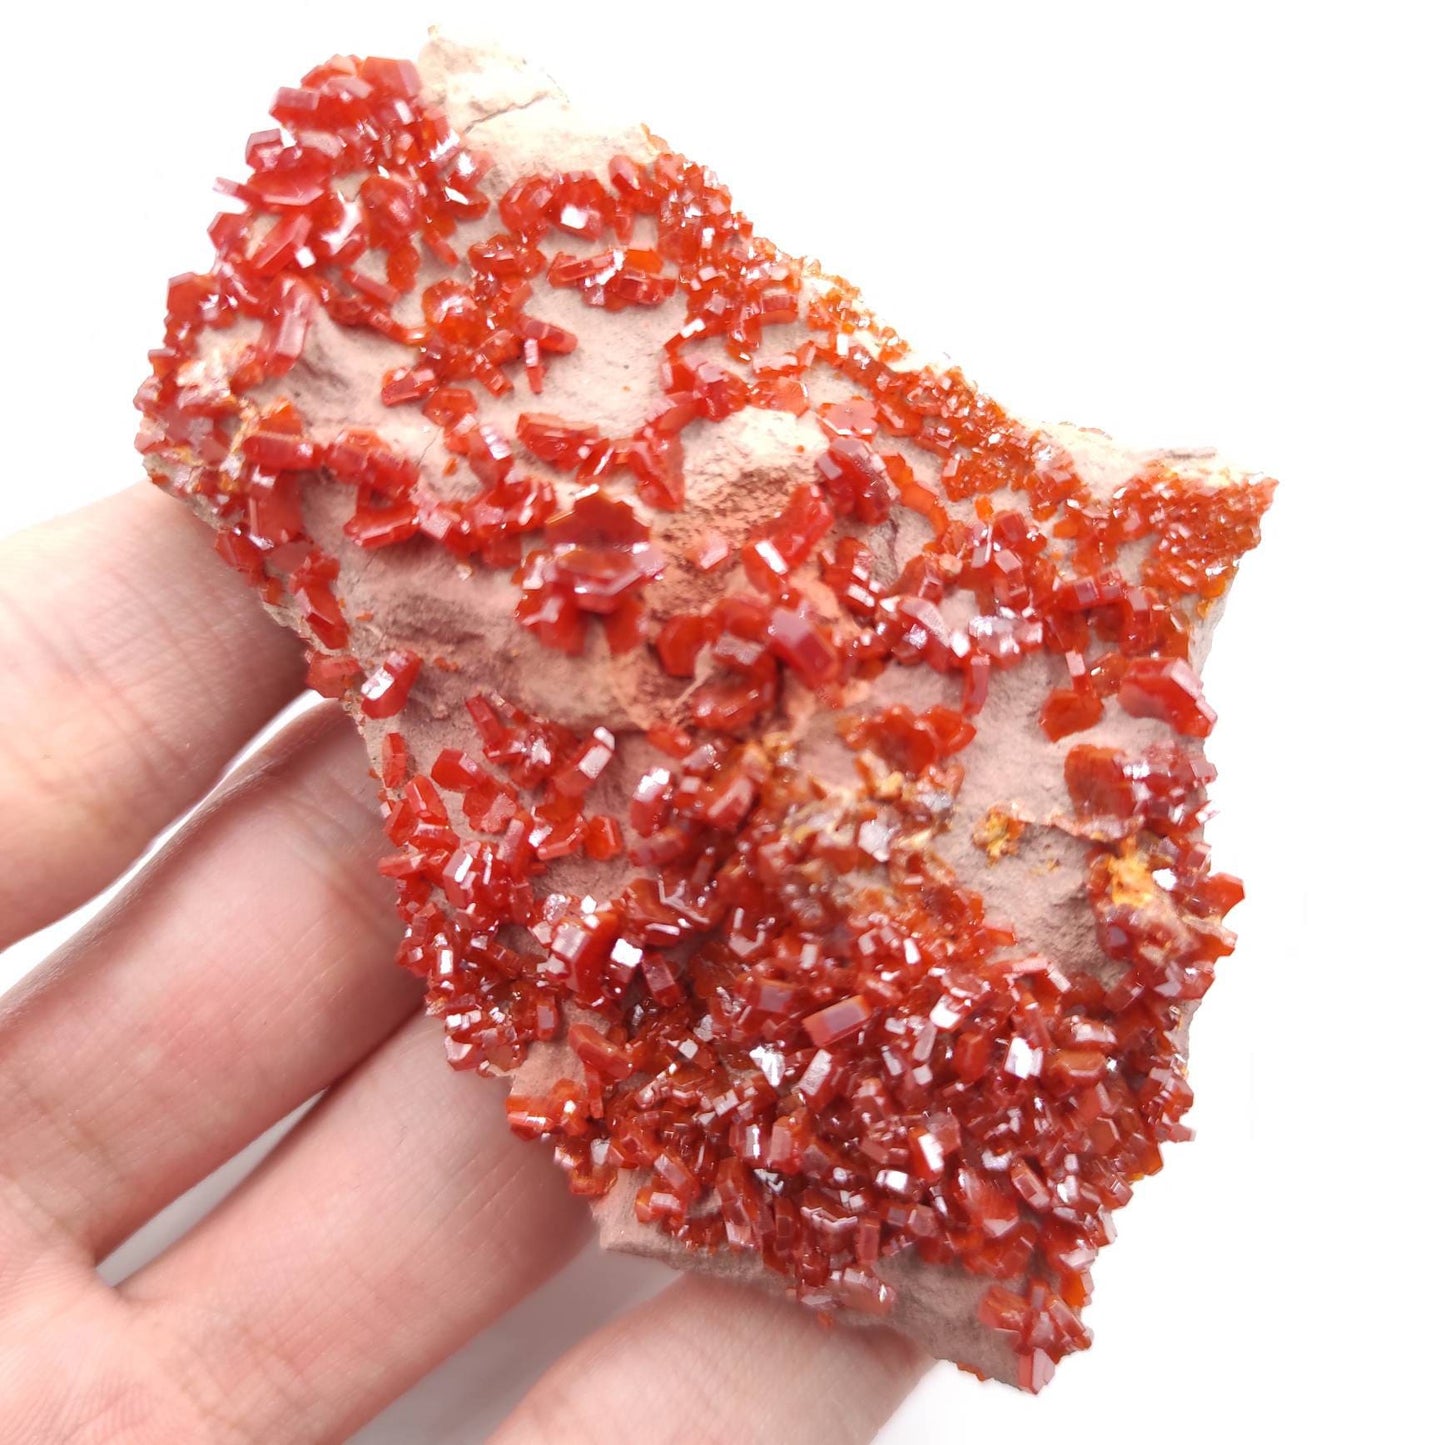 104g Vanadinite on Matrix - Red Vanadinite Crystals - High Quality Vanadinite - Collectors Grade Mineral Specimen - Mibladen, Morocco